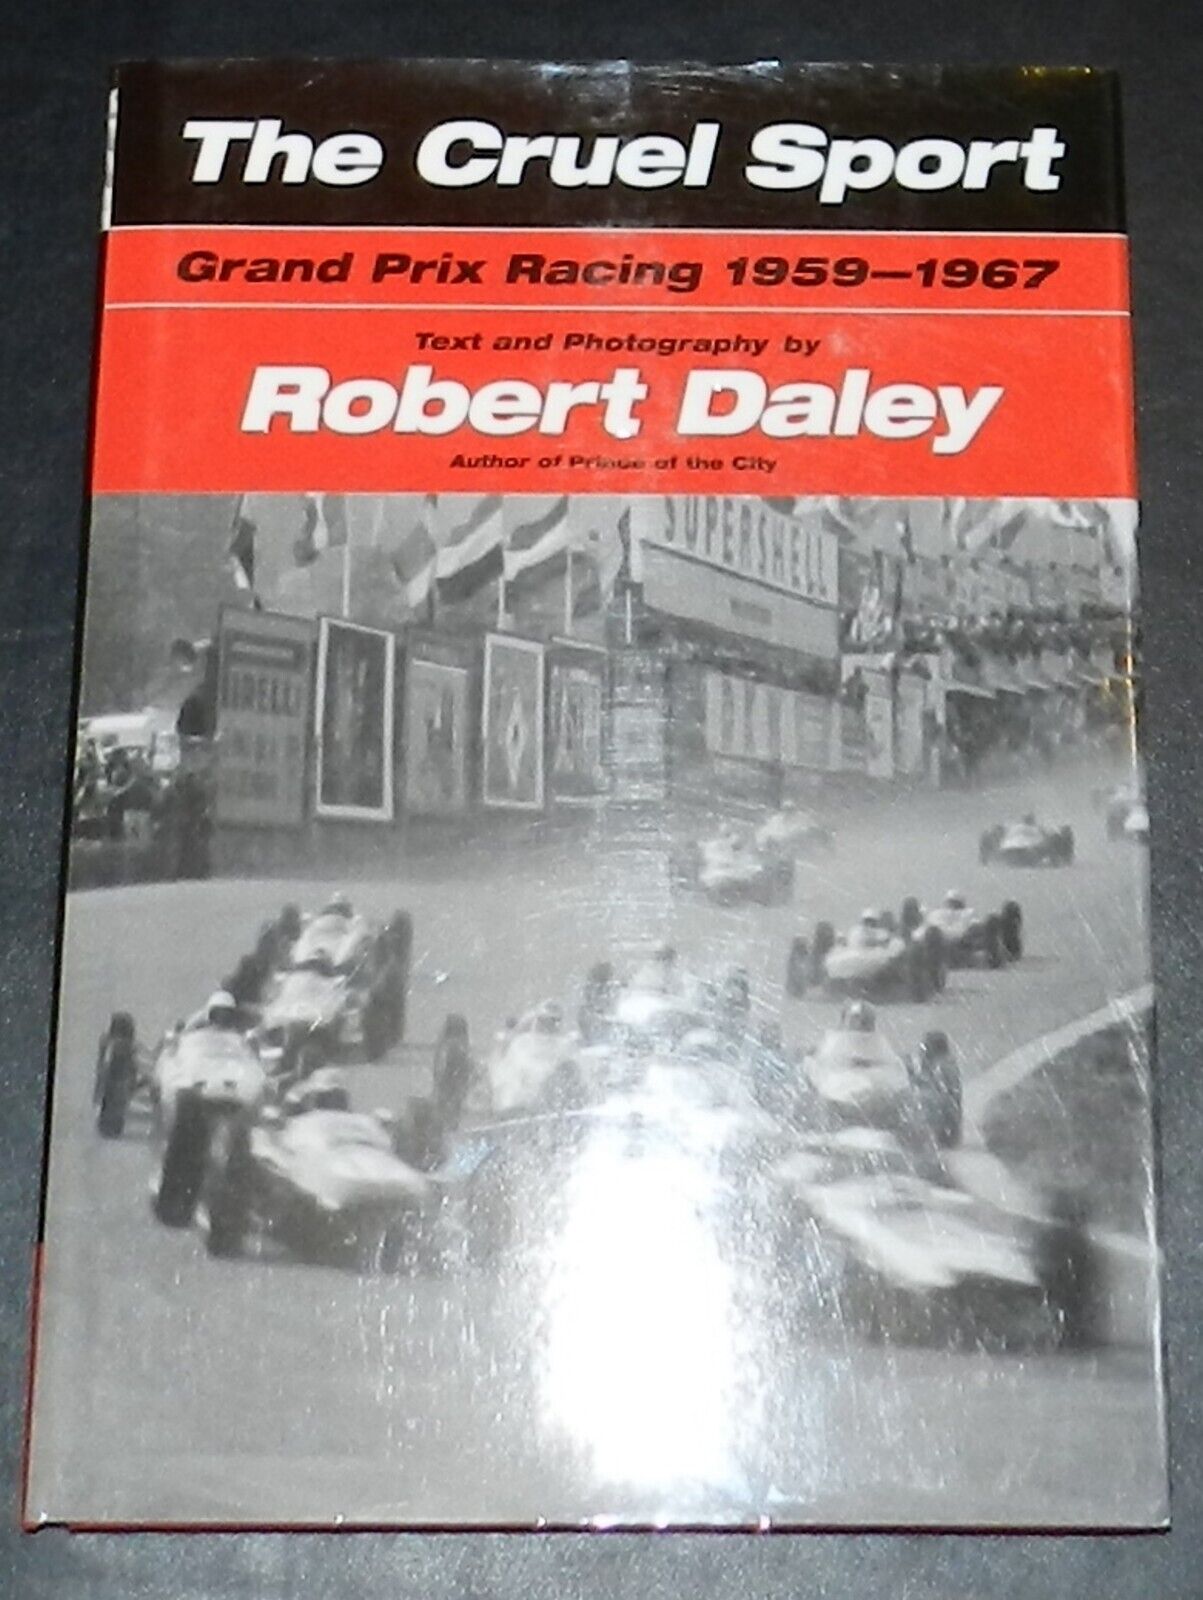 The Cruel Sport: Grand Prix Racing 1959-1967 by Robert Daley